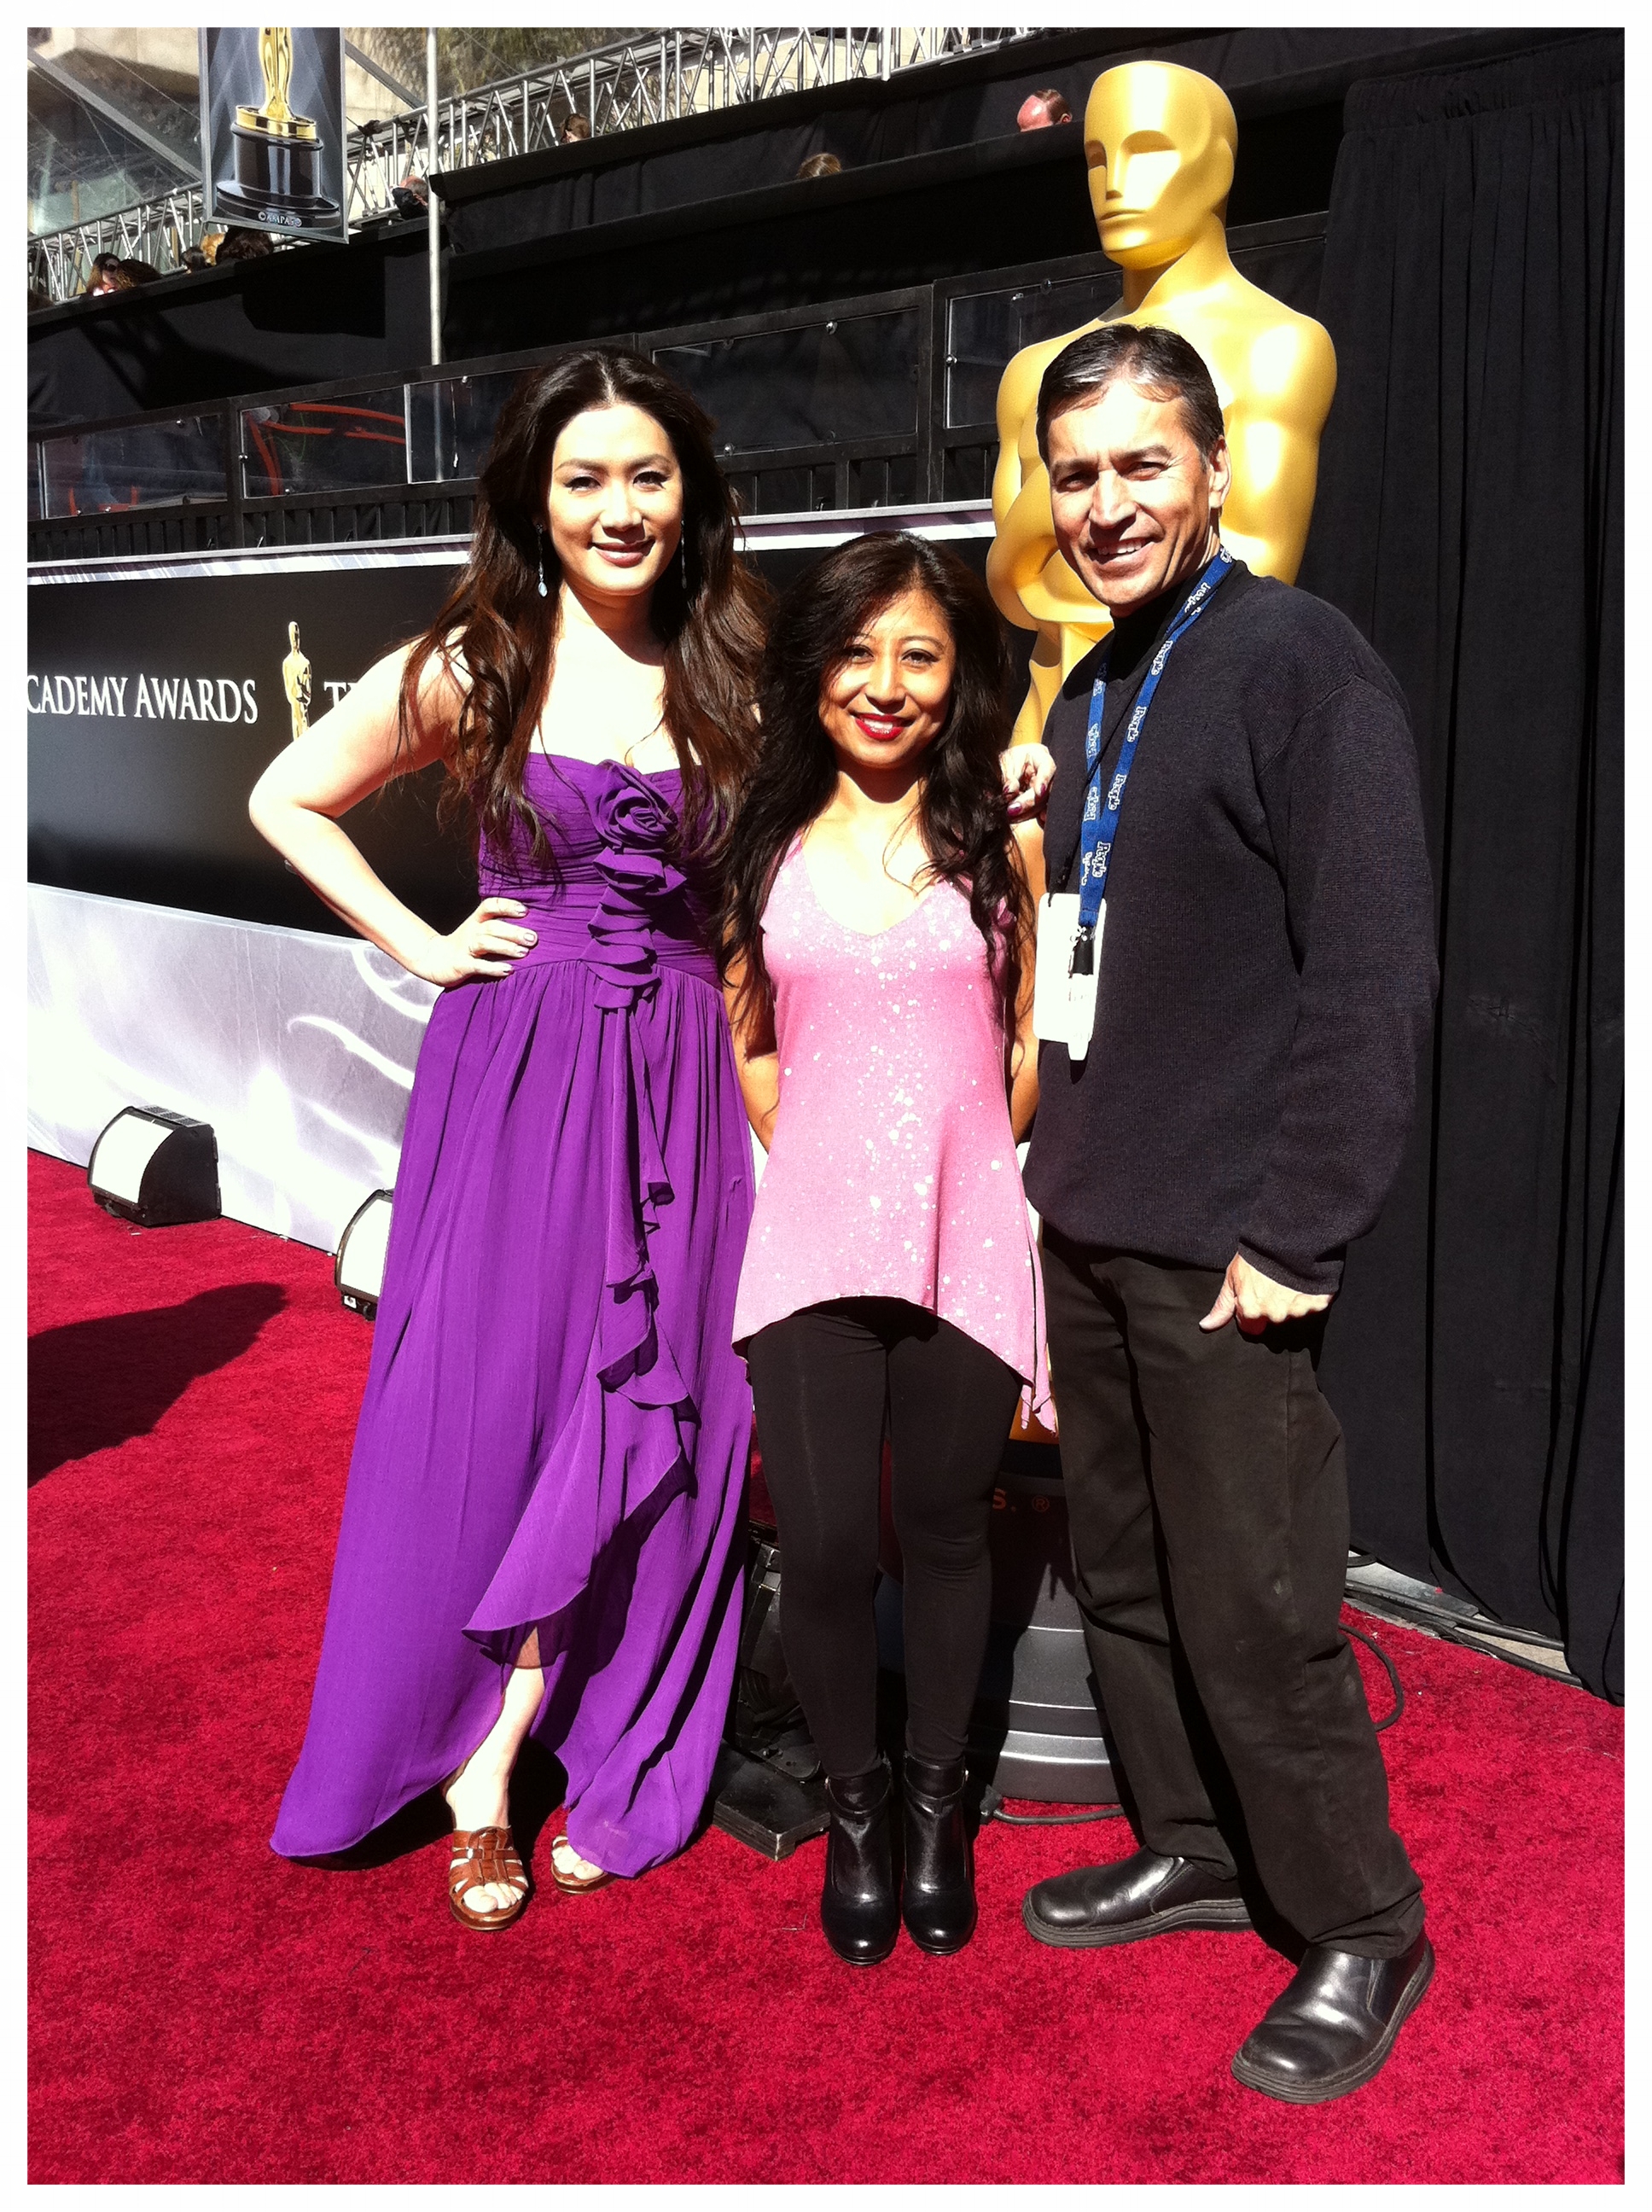  Academy Awards w/&nbsp;Armando V. &amp; LA18 Reporter Kelly C. 